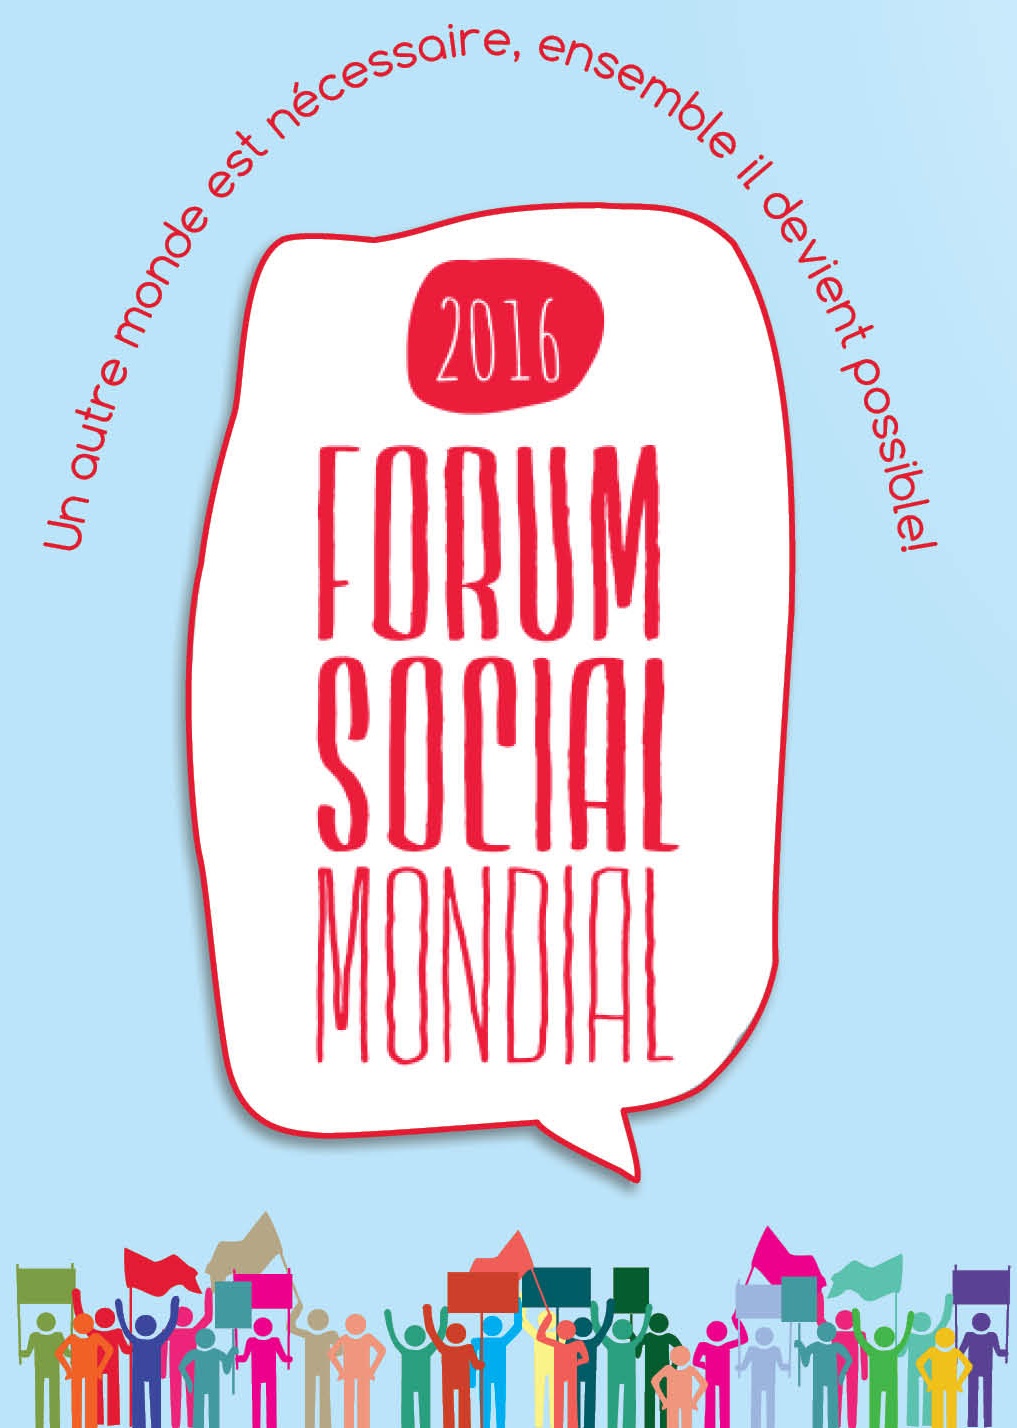 ForumsocialMondial